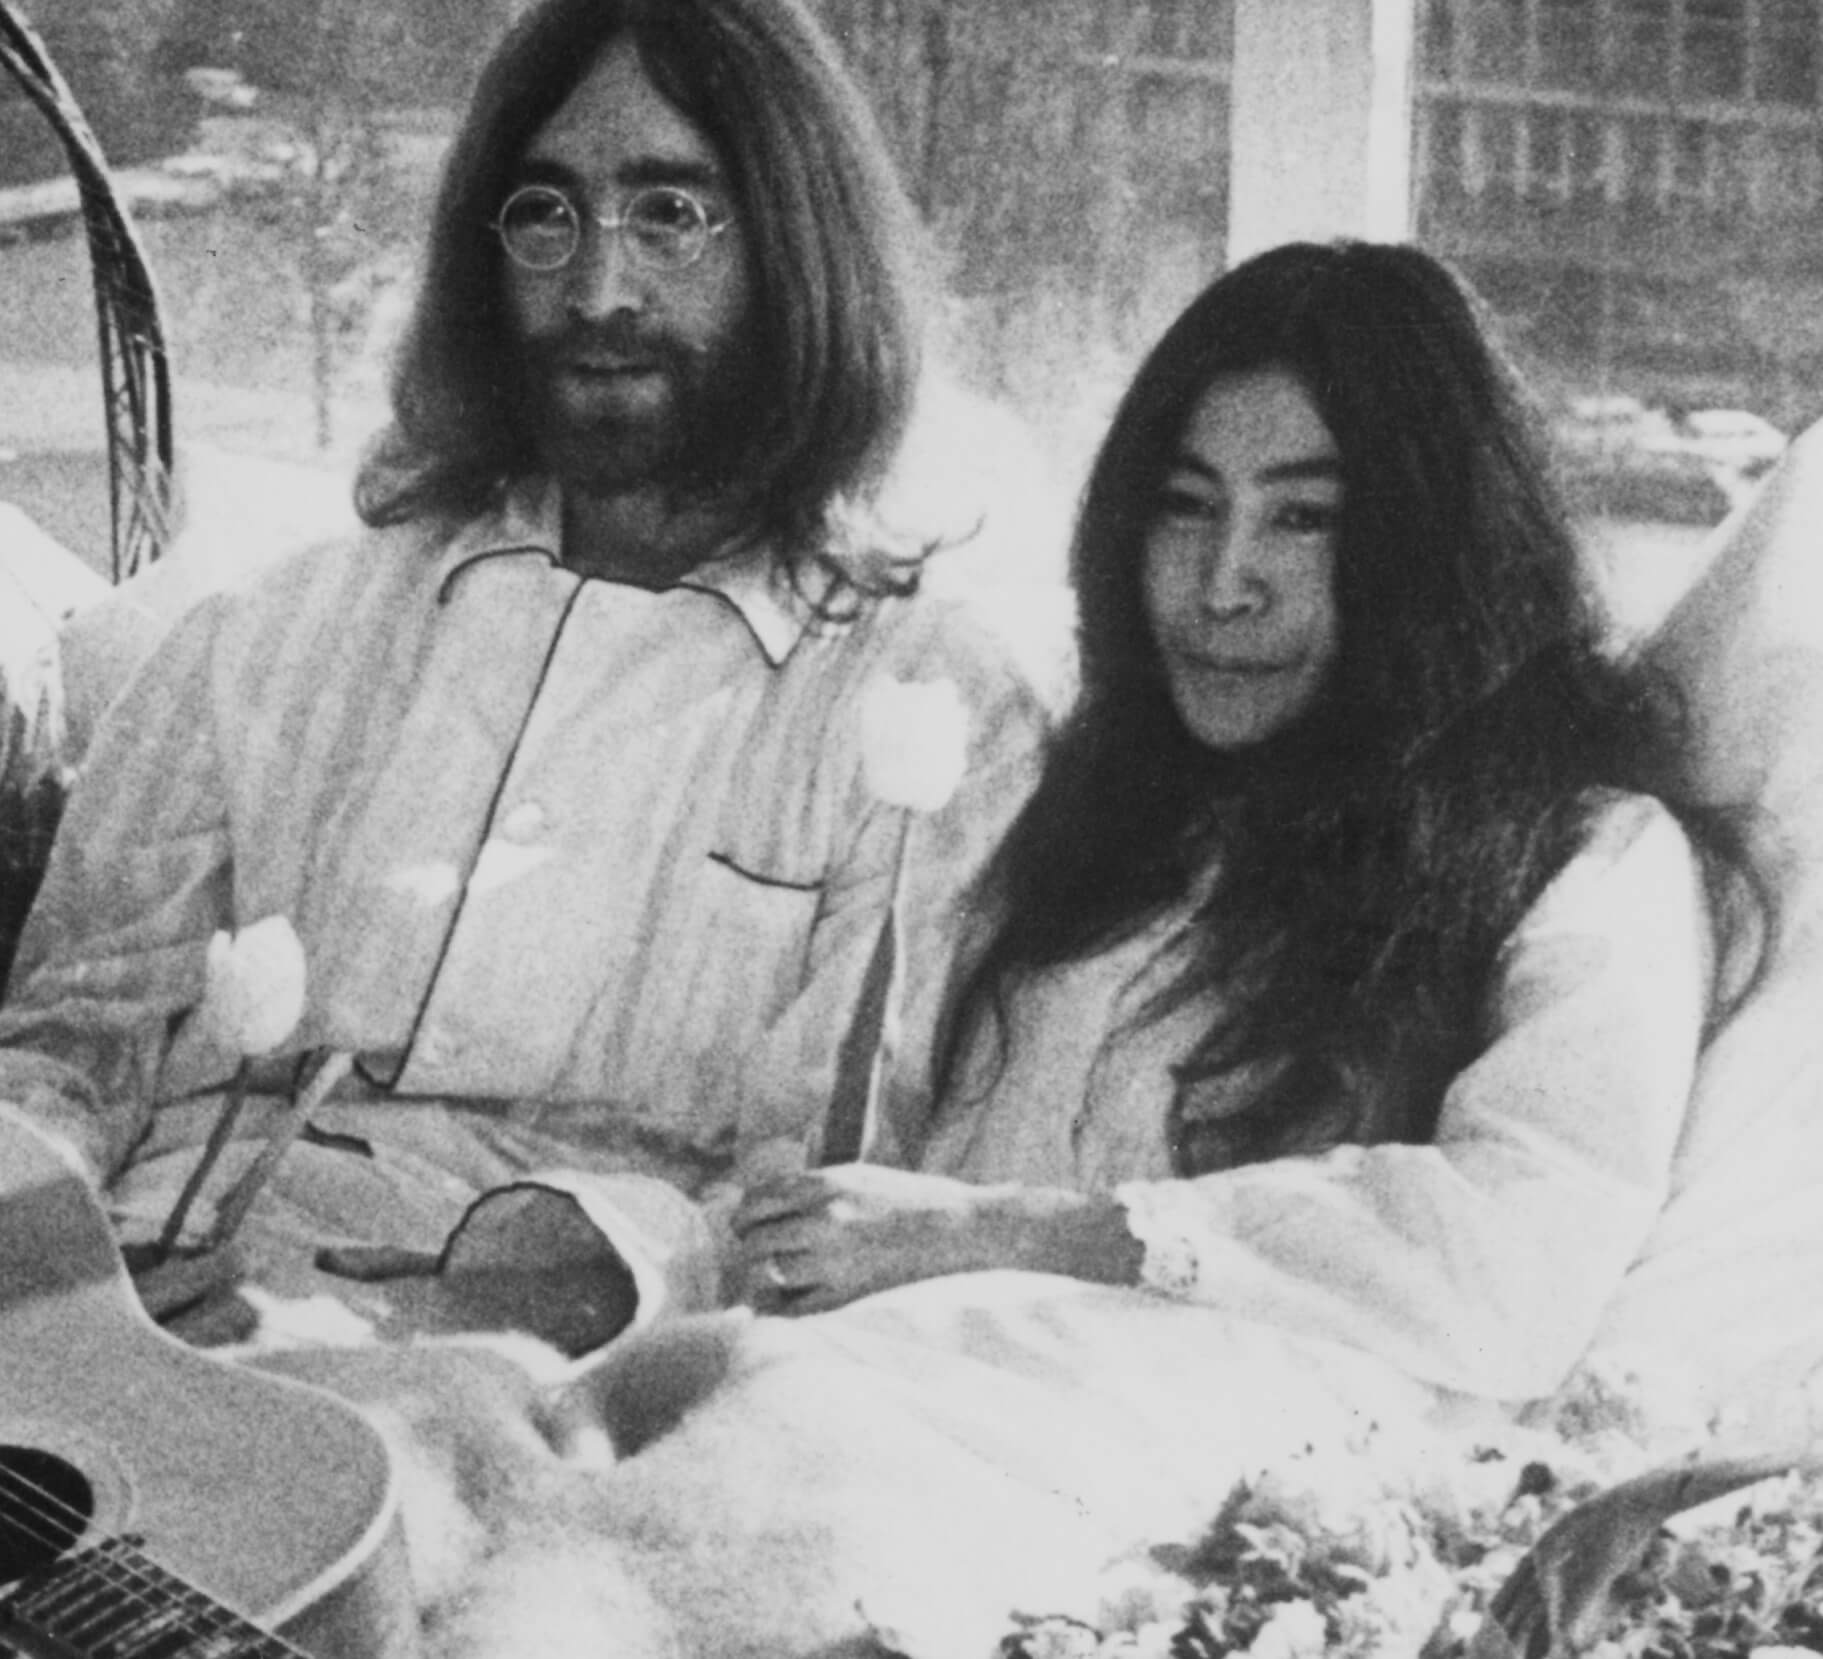 The Beatles' John Lennon with Yoko Ono